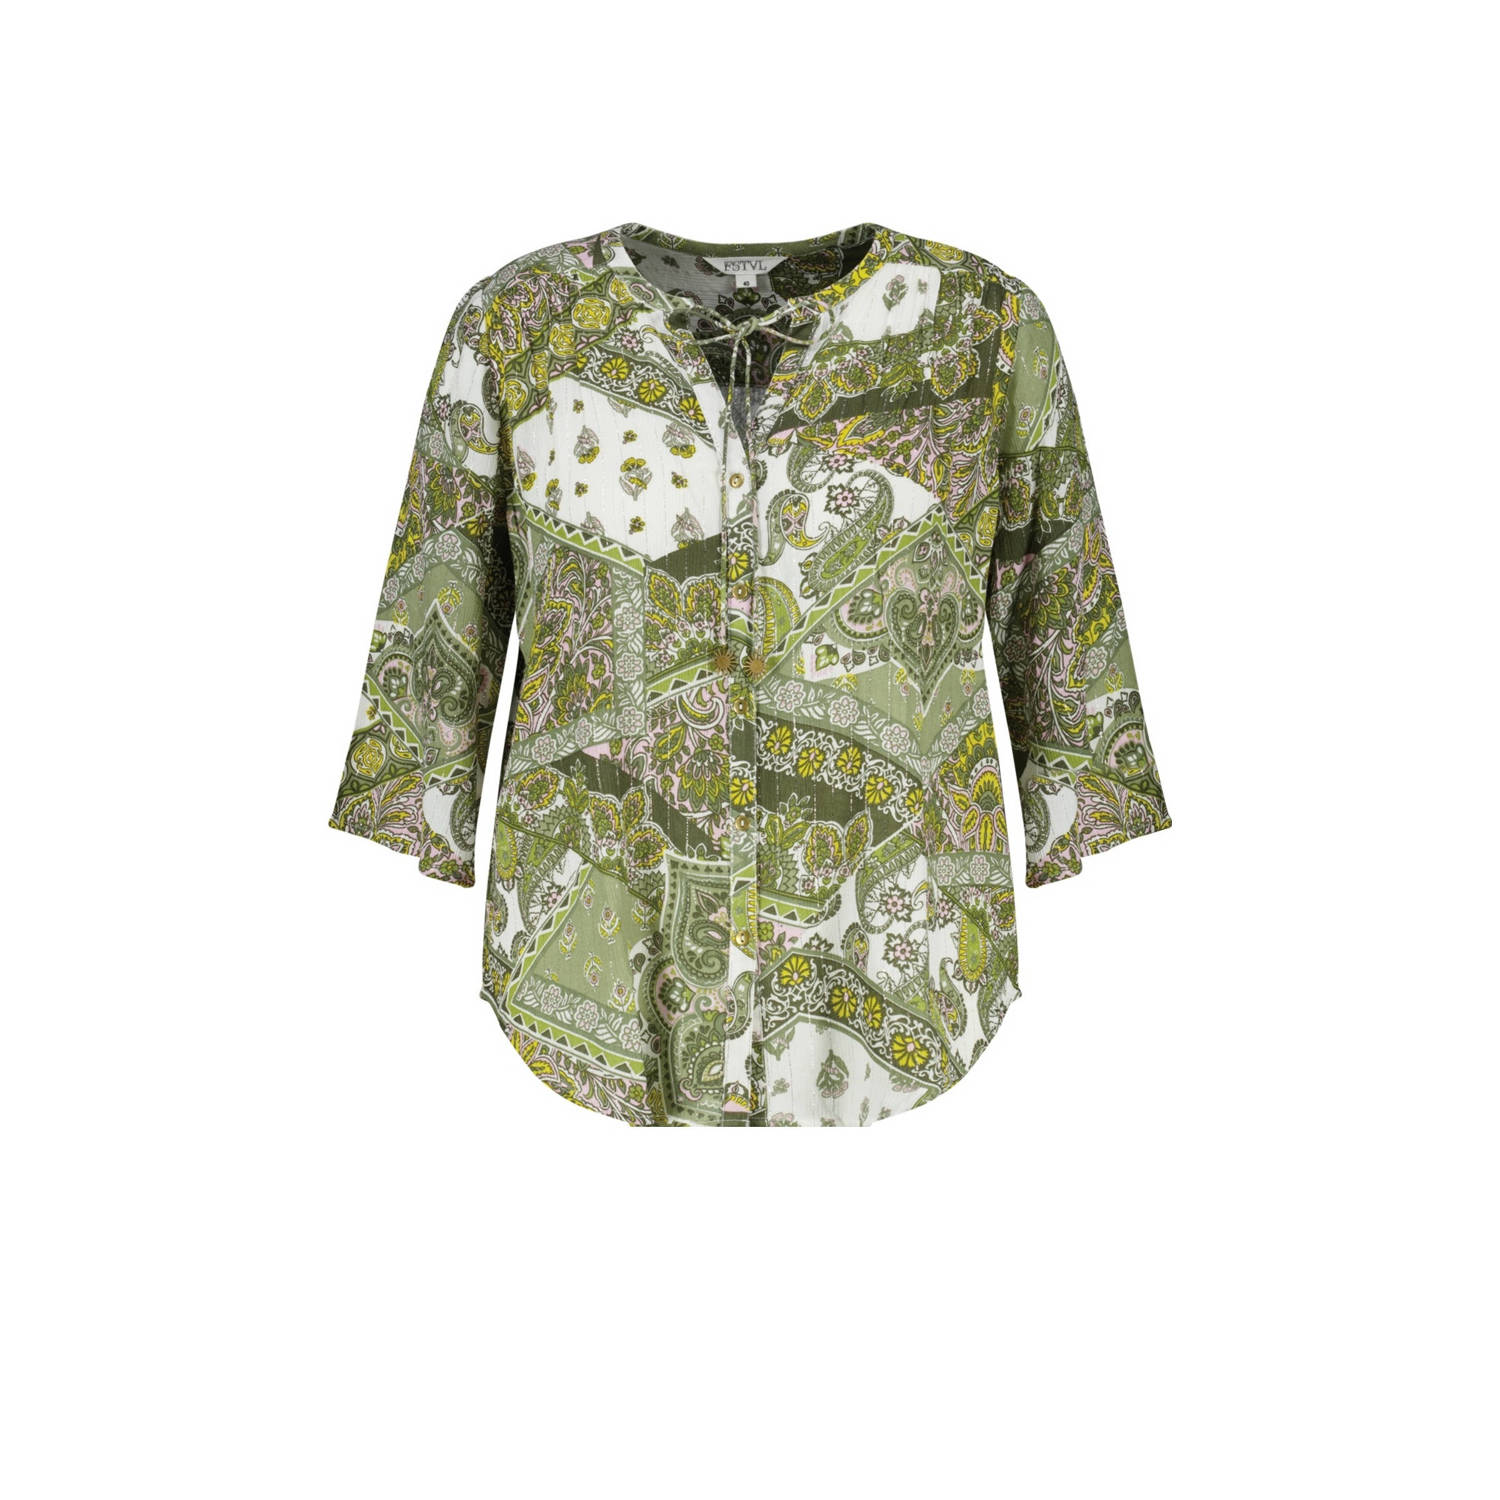 MS Mode blouse met all over print groen ecru